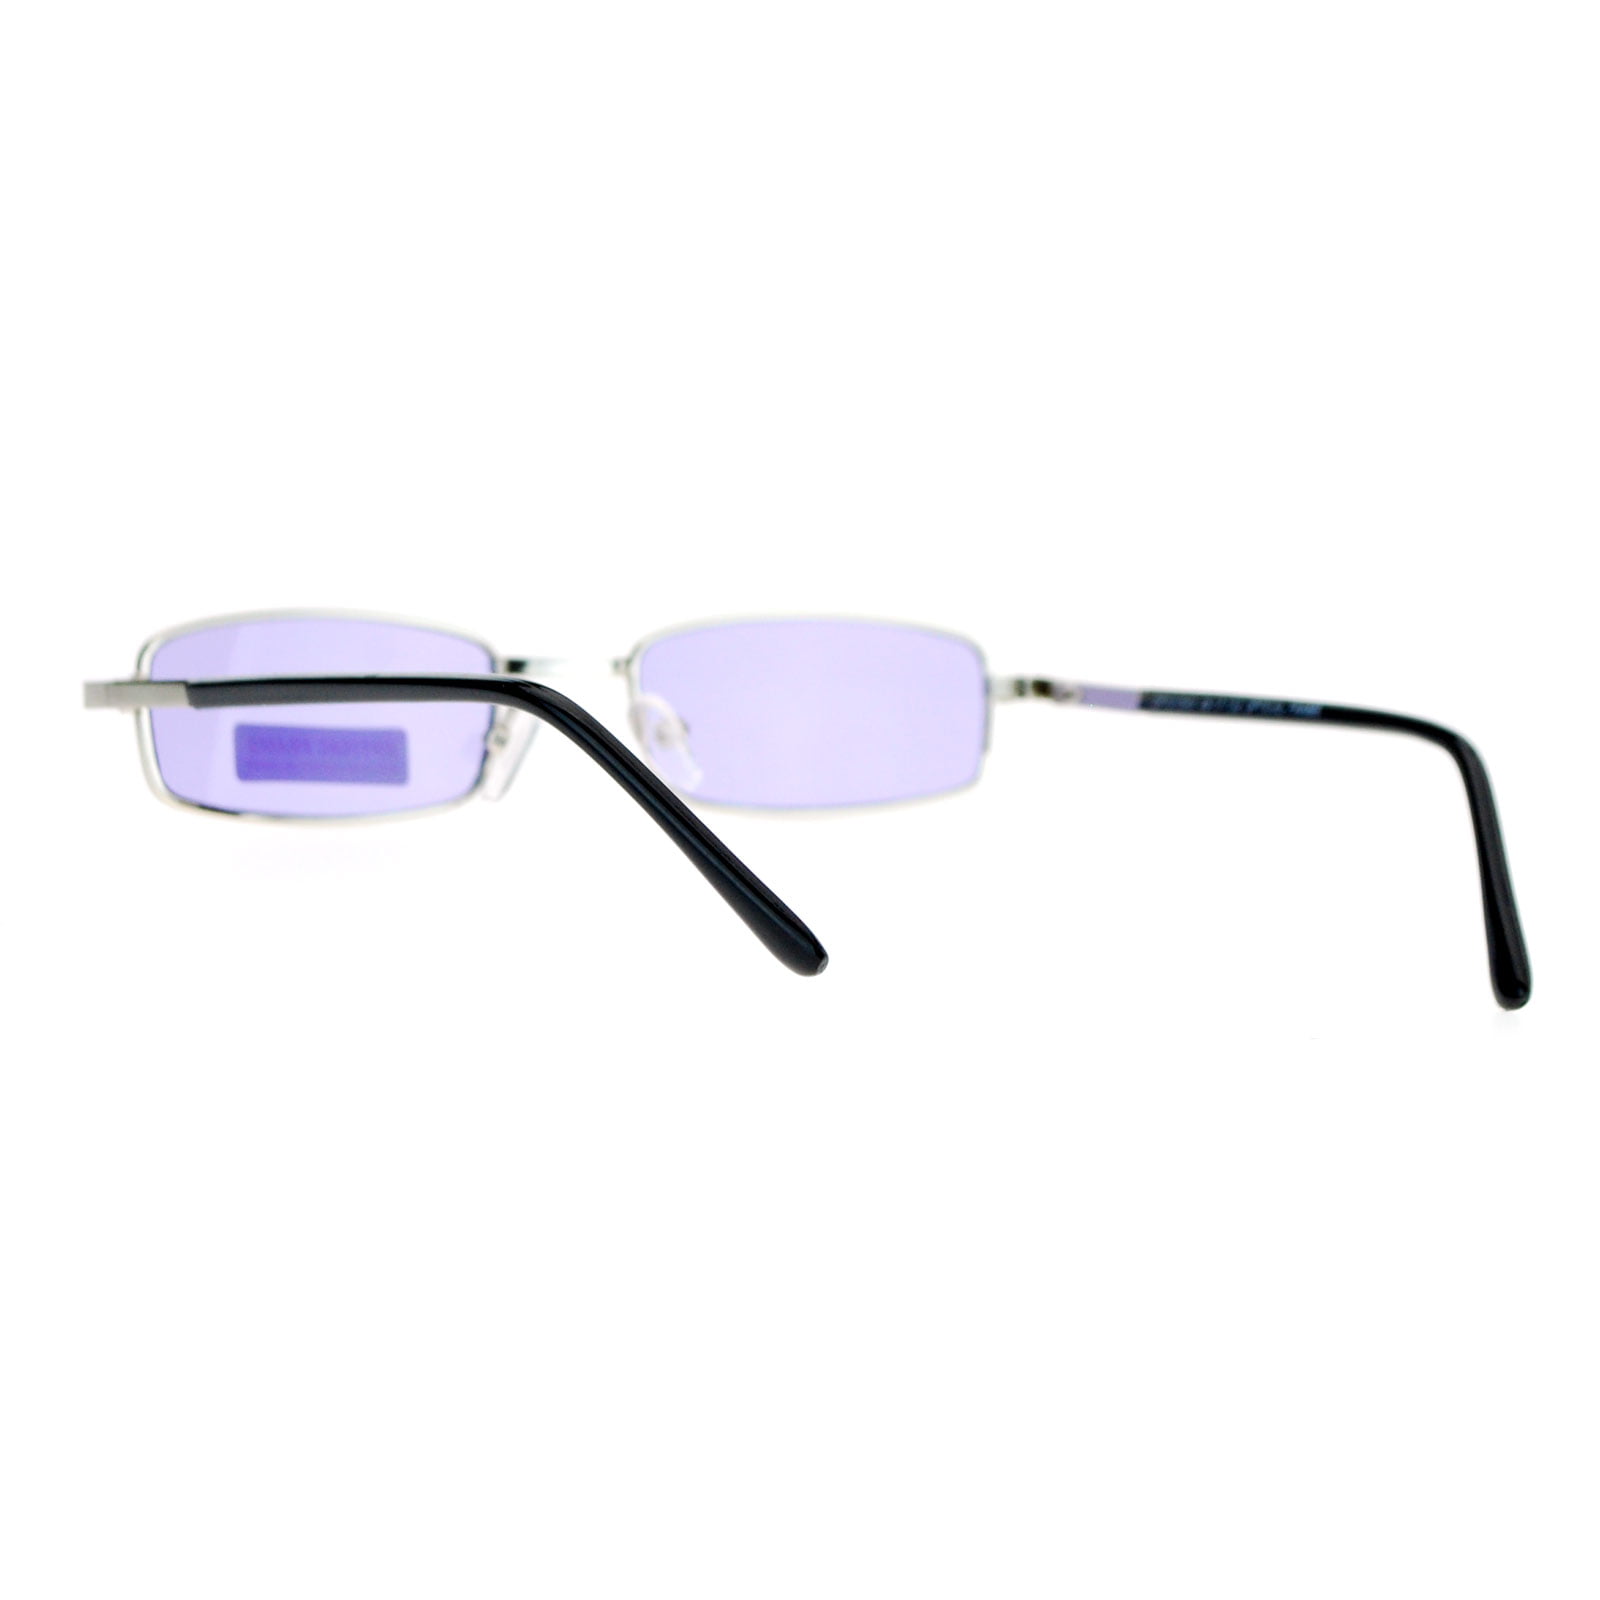 Classic Gold Aviator Sunglasses - Purple Gradient Sunglasses - Gold  Sunglasses - $14.00 - Lulus